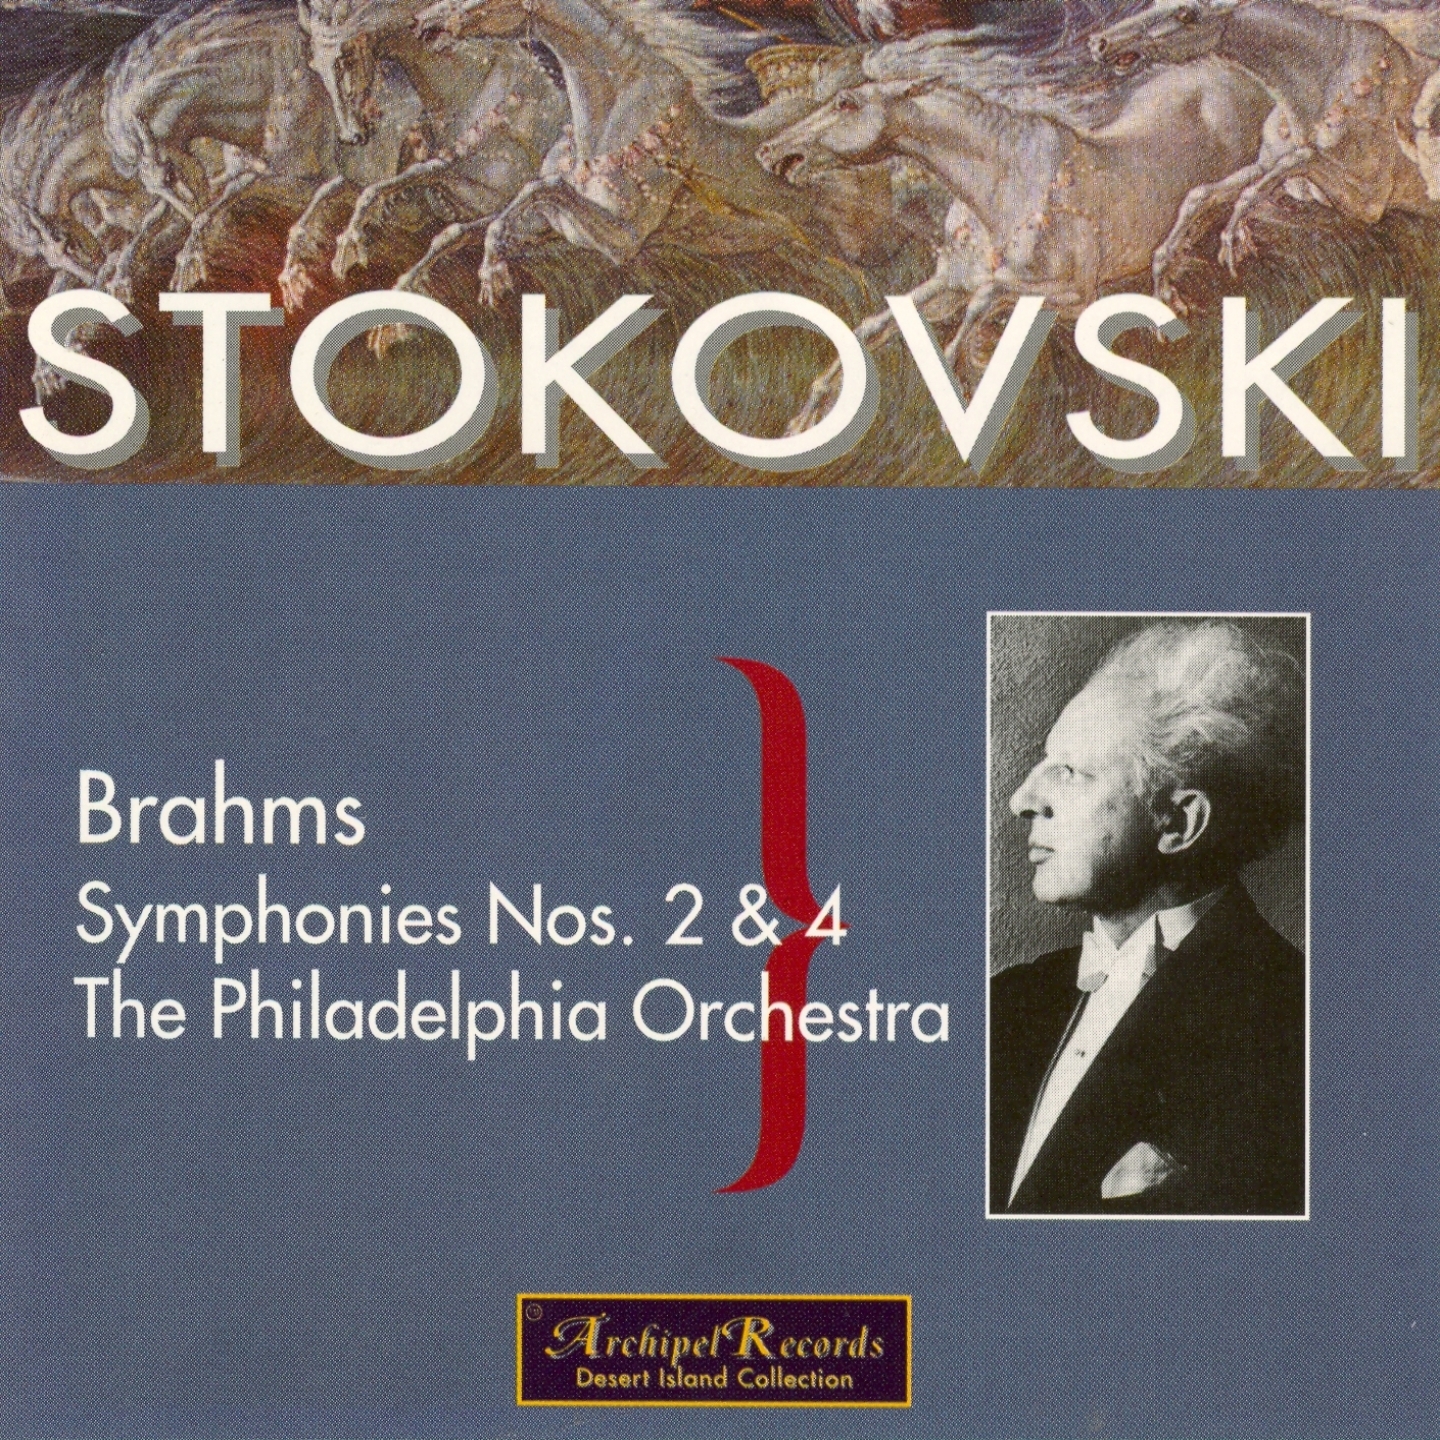 Brahms: Symphonies Nos 2 & 4